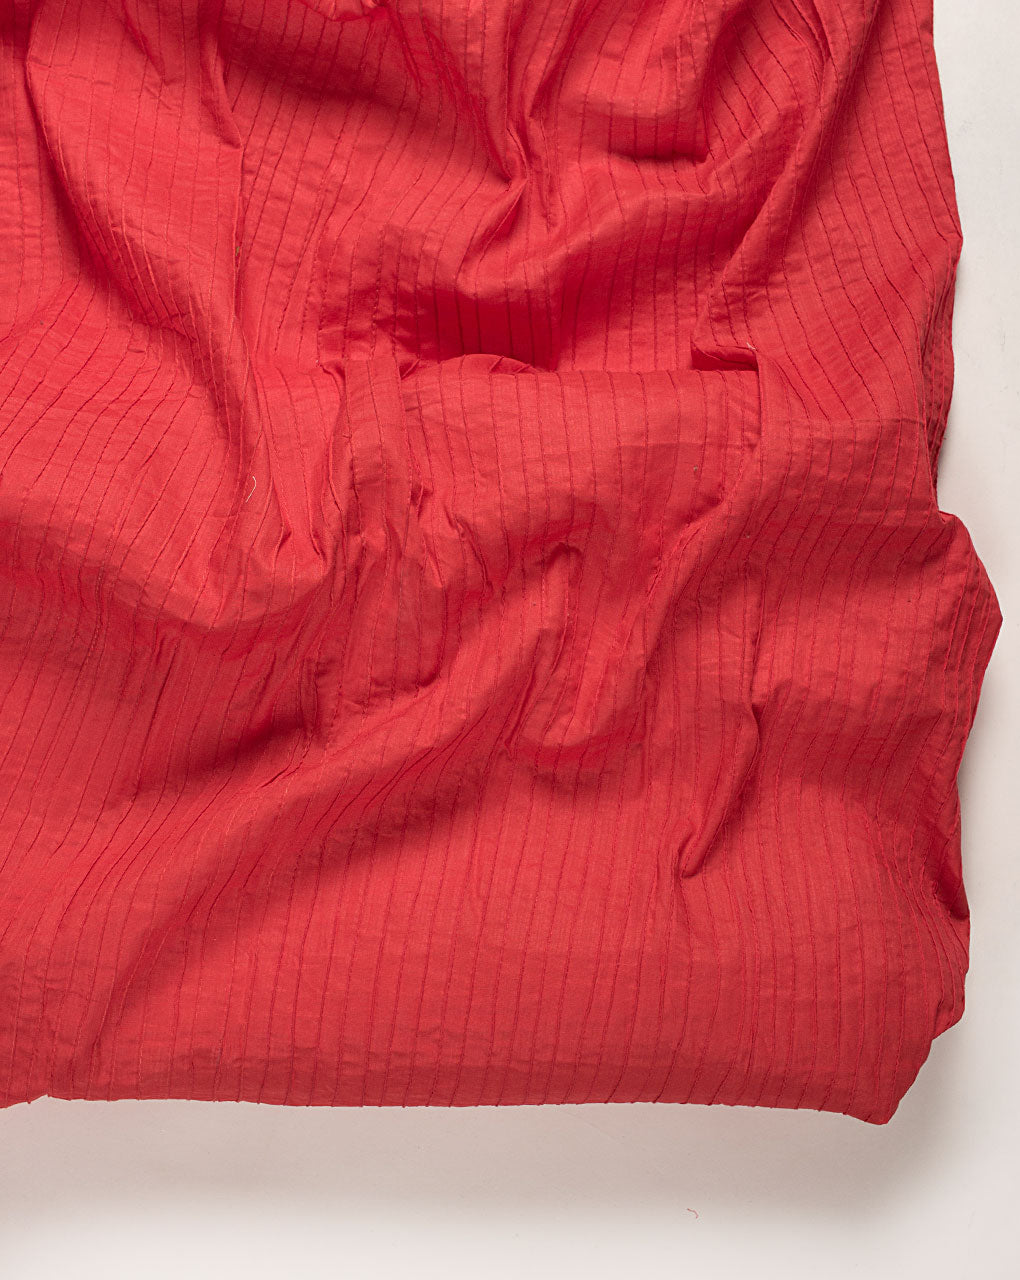 Red Pin-Tucks Cotton Fabric